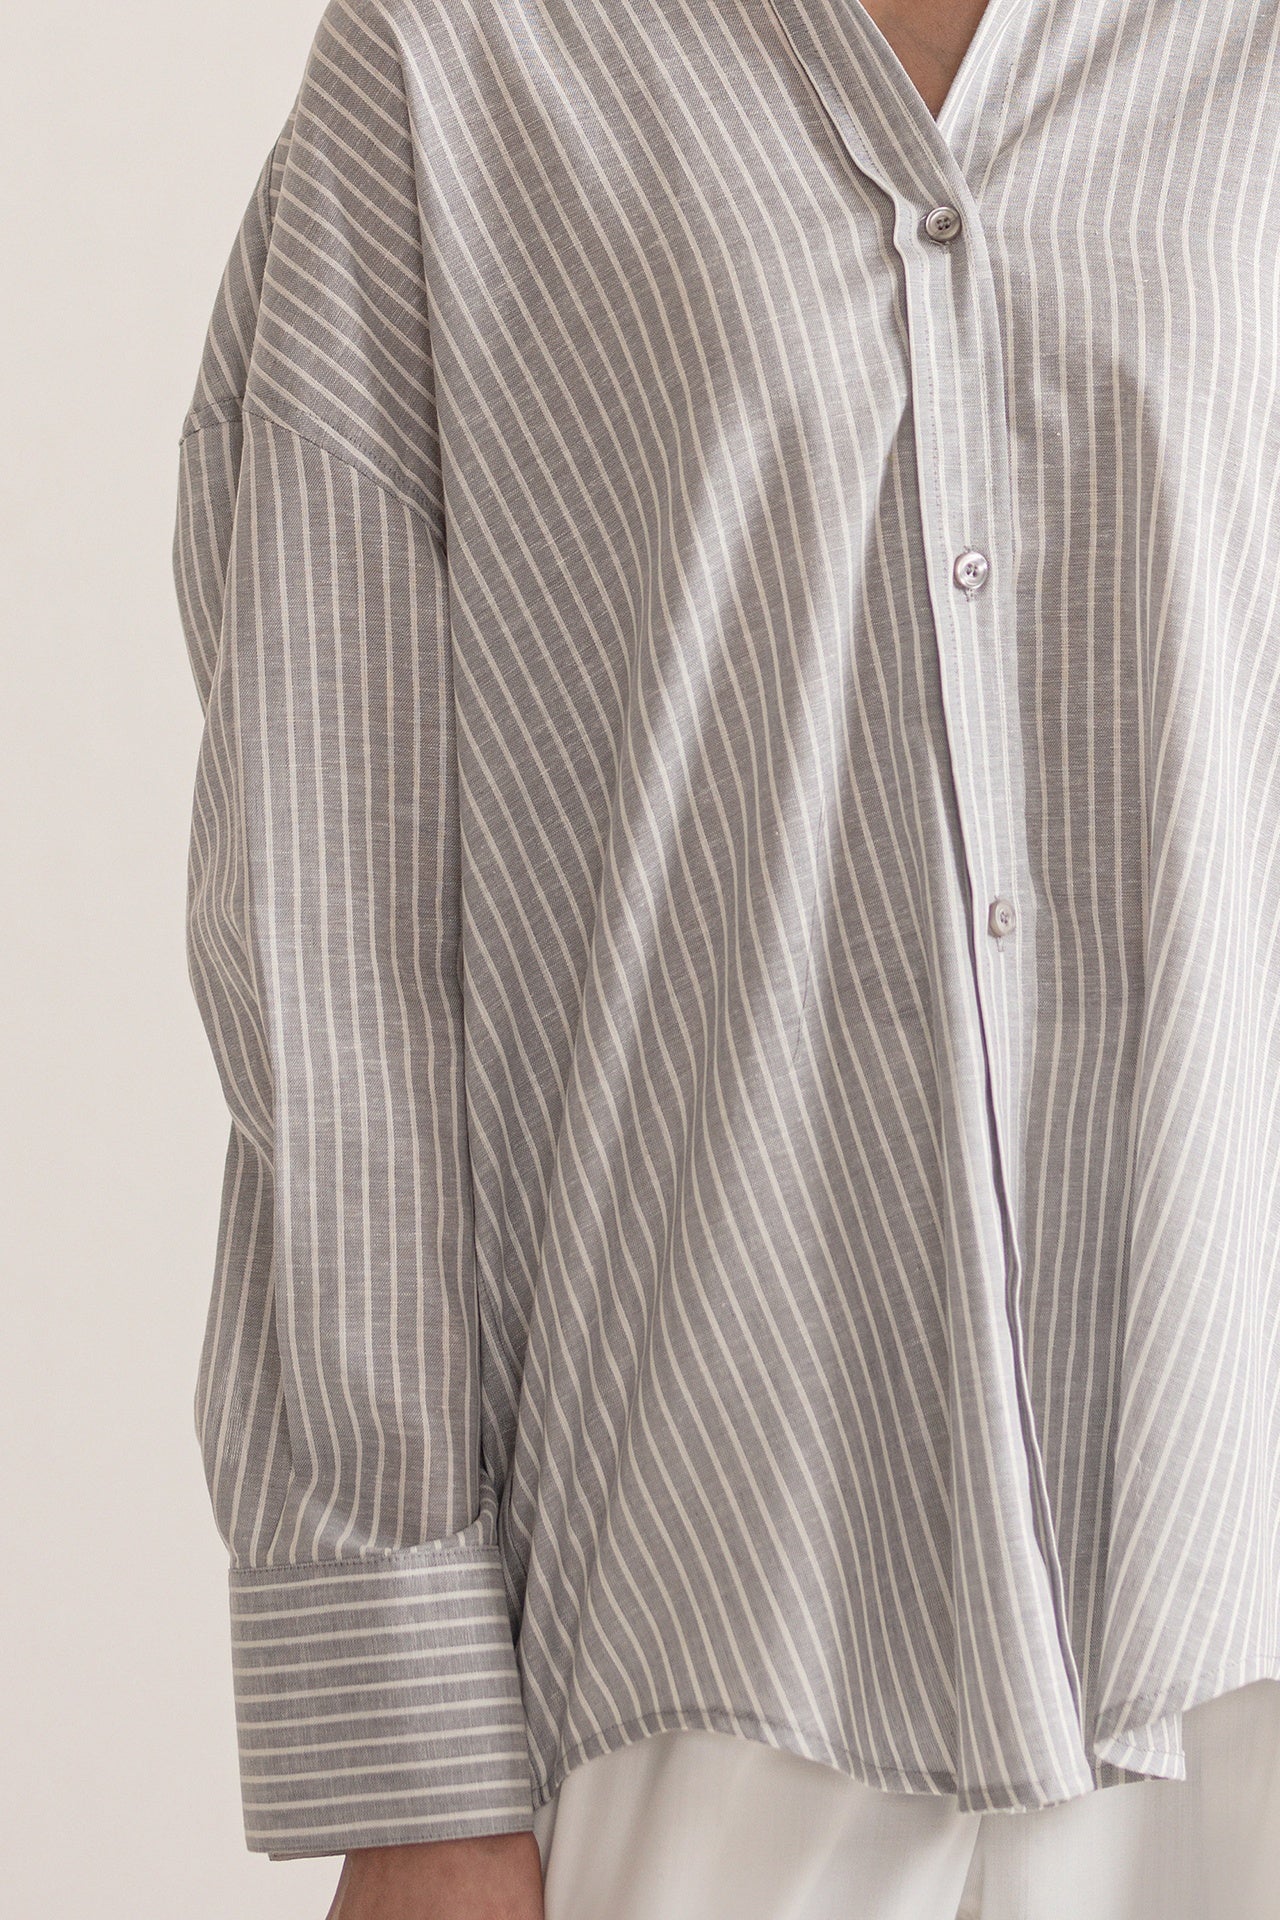 White Striped Oxford Shirt price